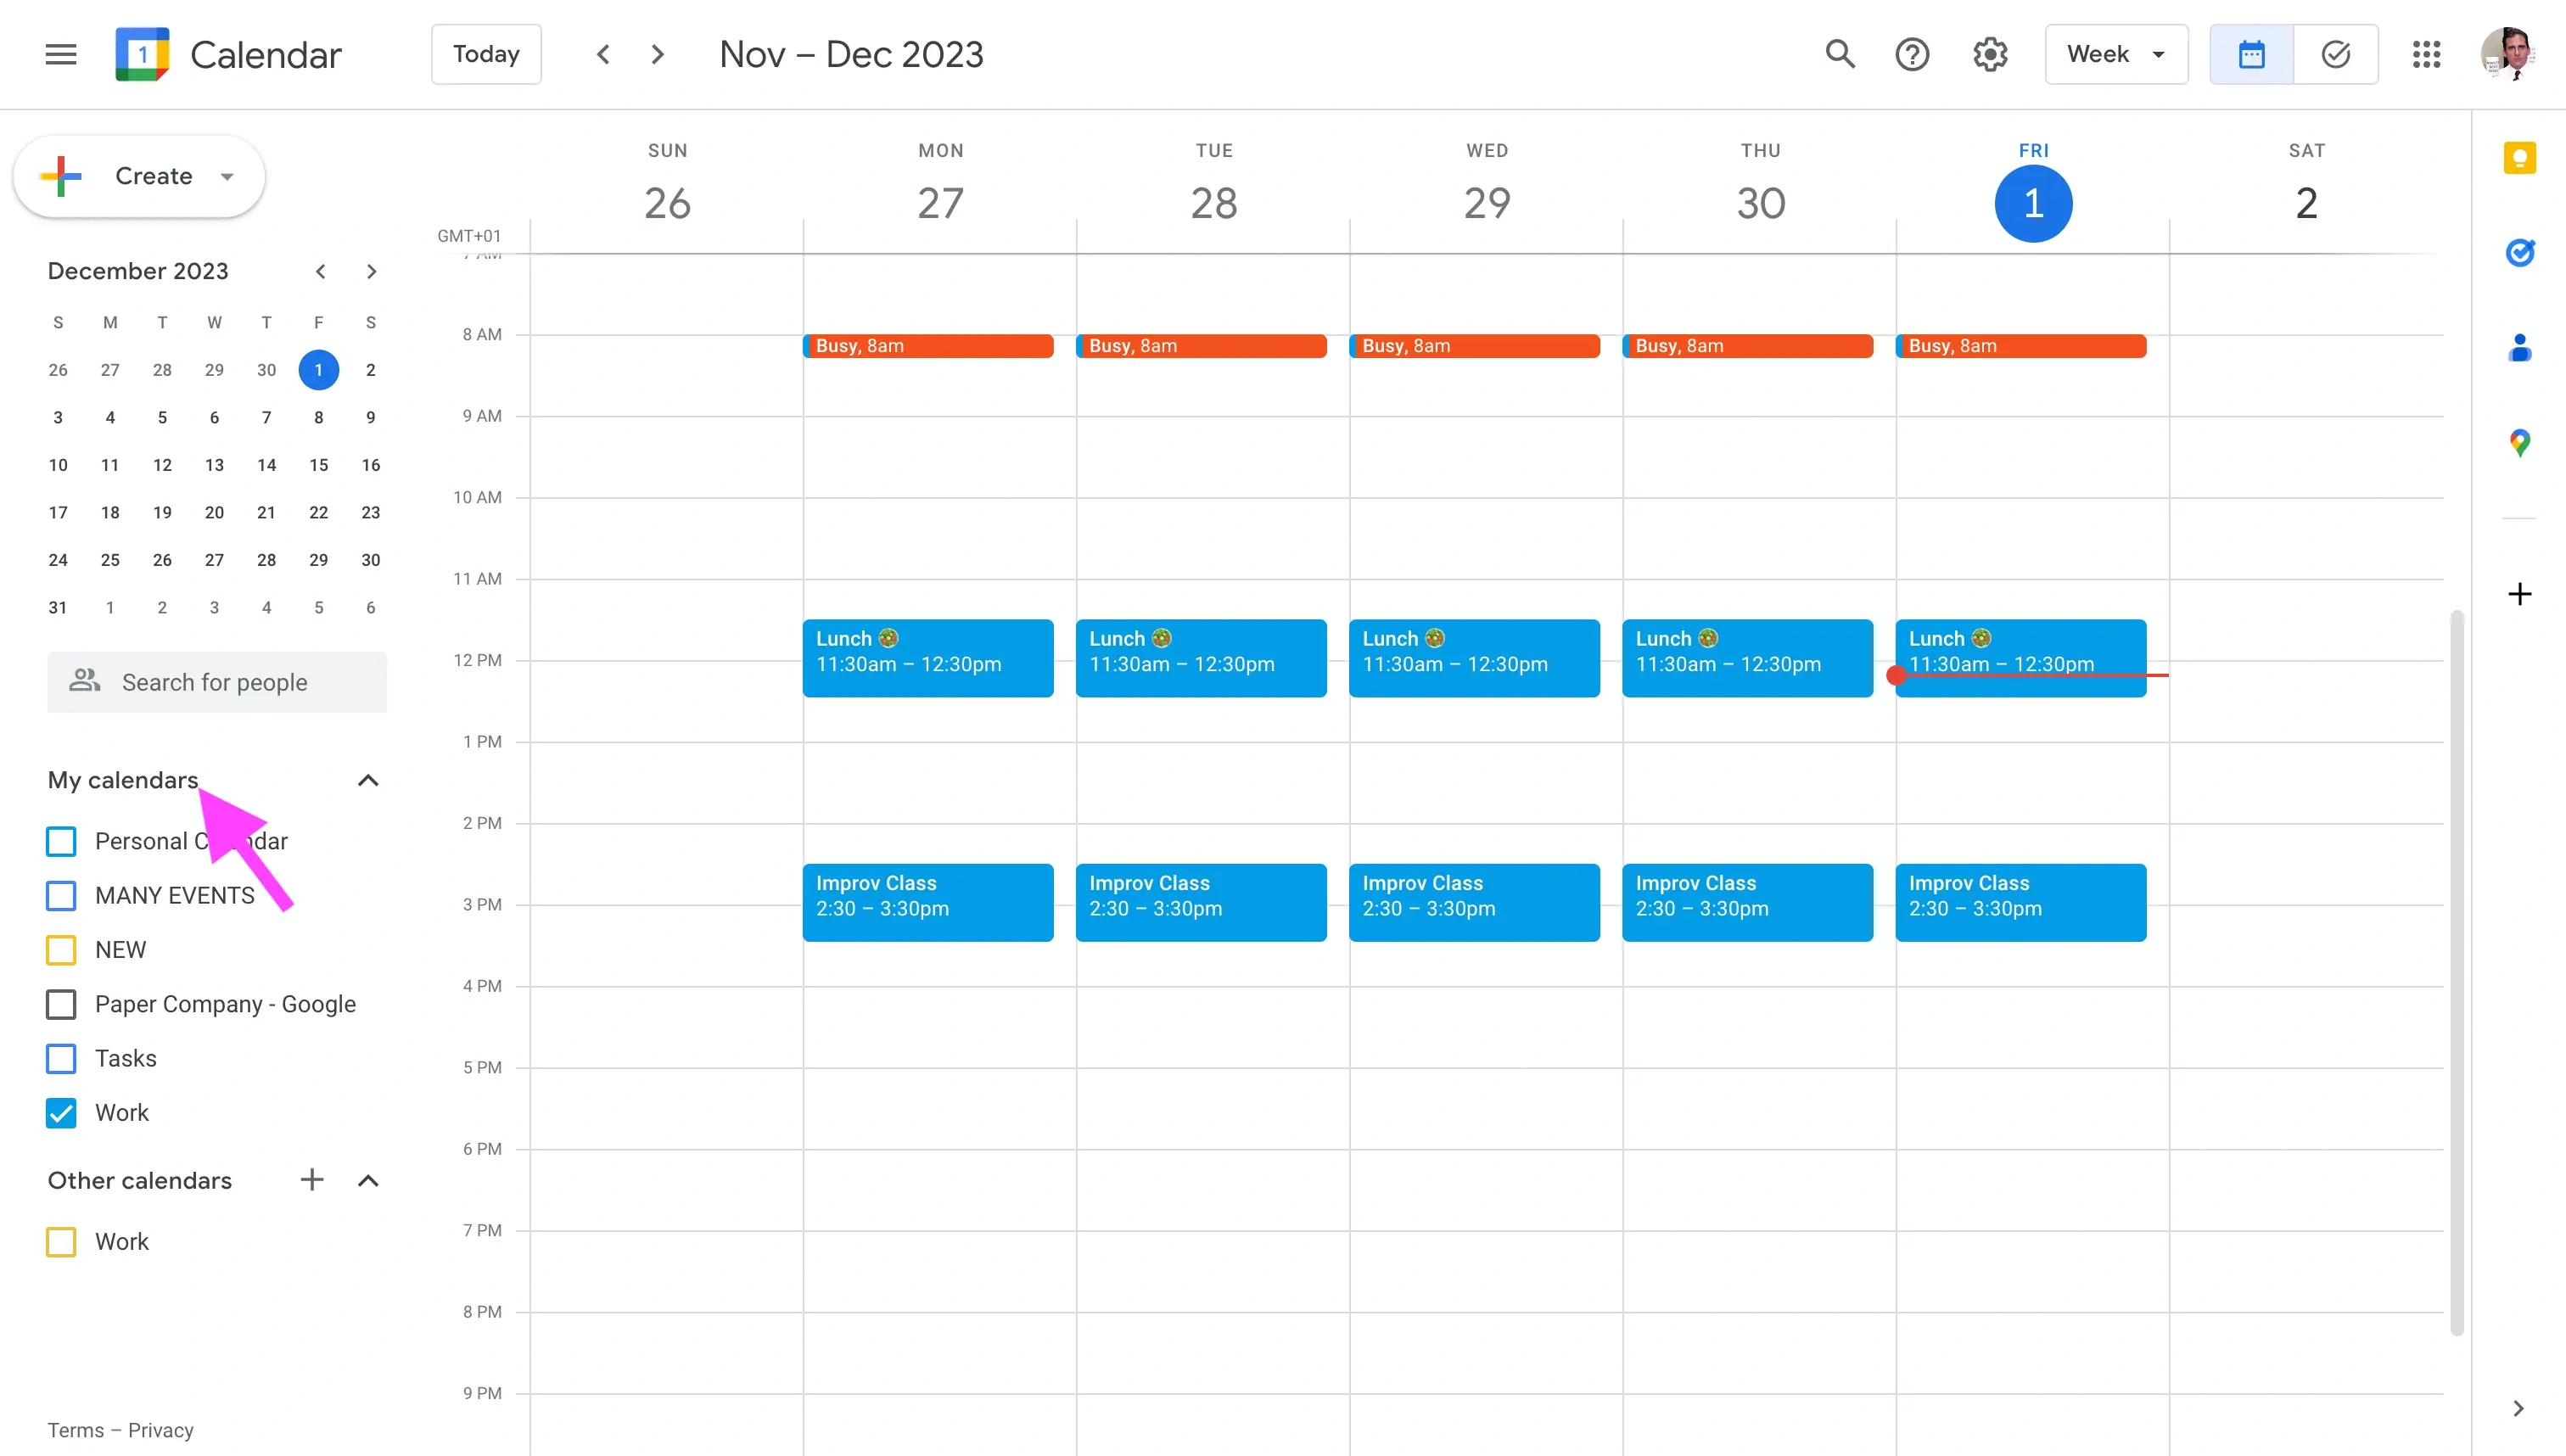 Google Calendar - My Calendars section